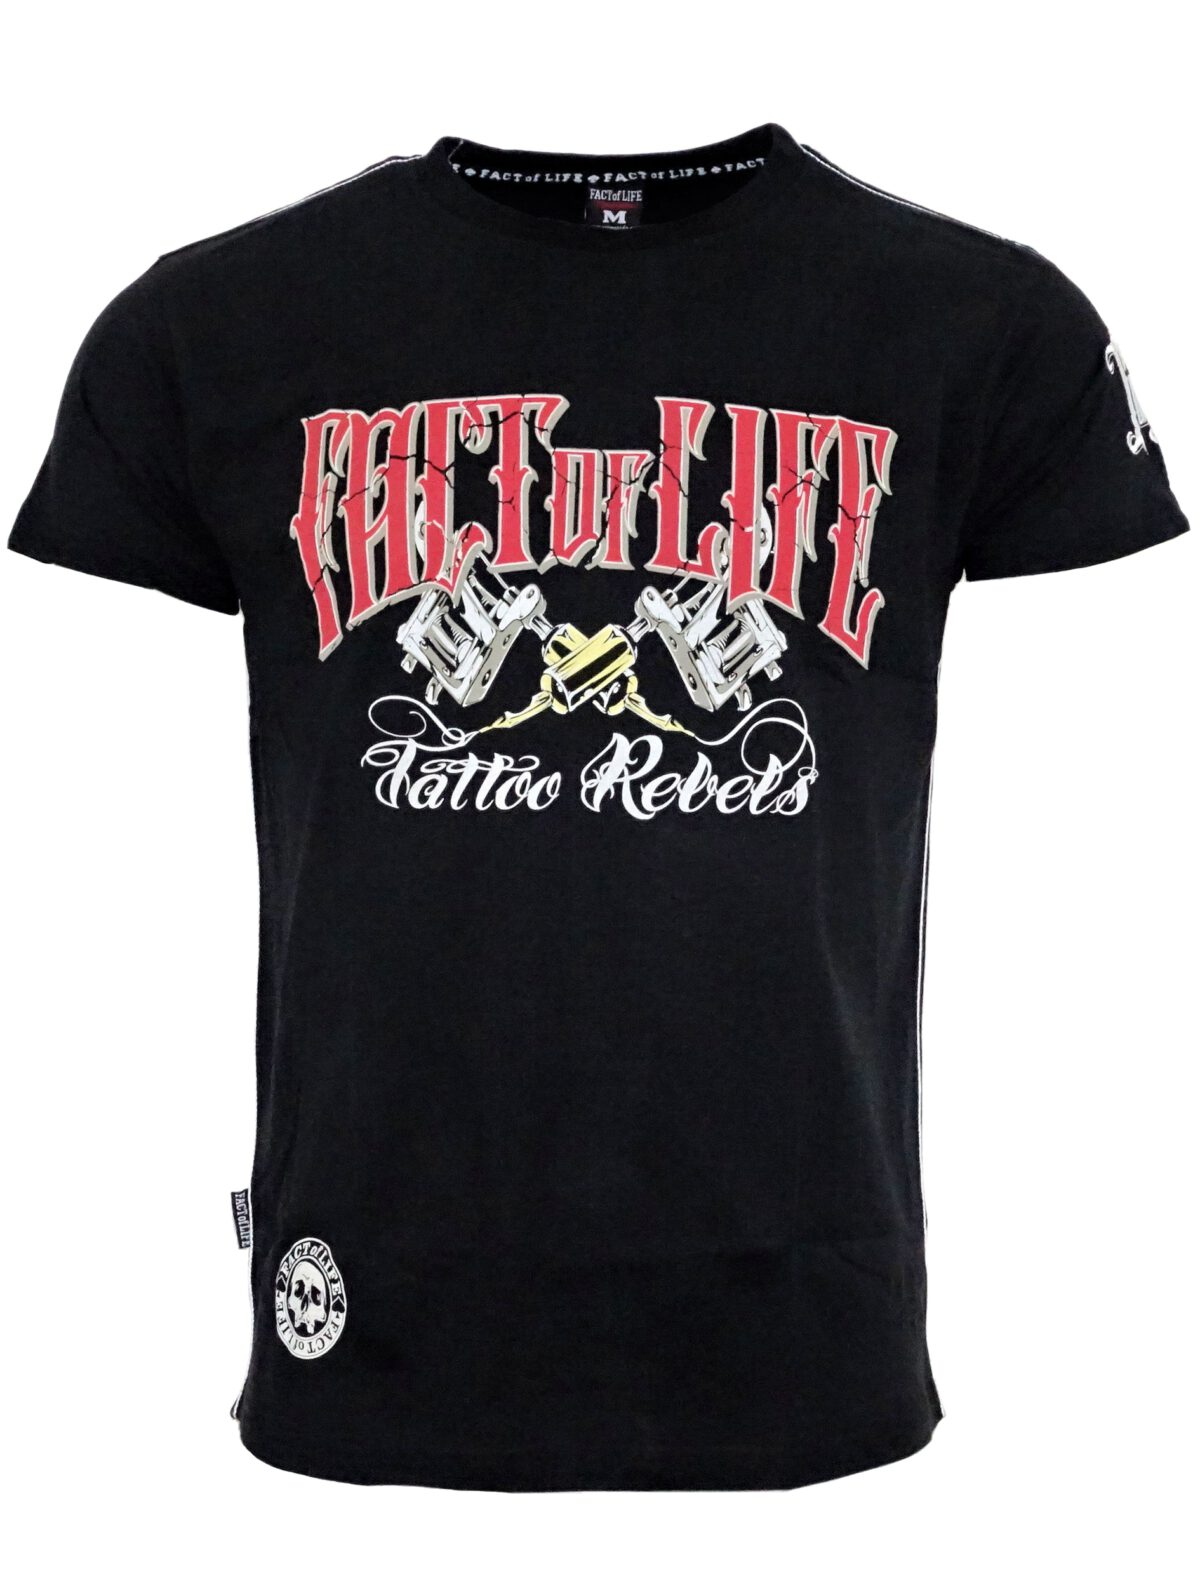 Fact of Life T-Shirt TS-32 Tattoo Rebels black